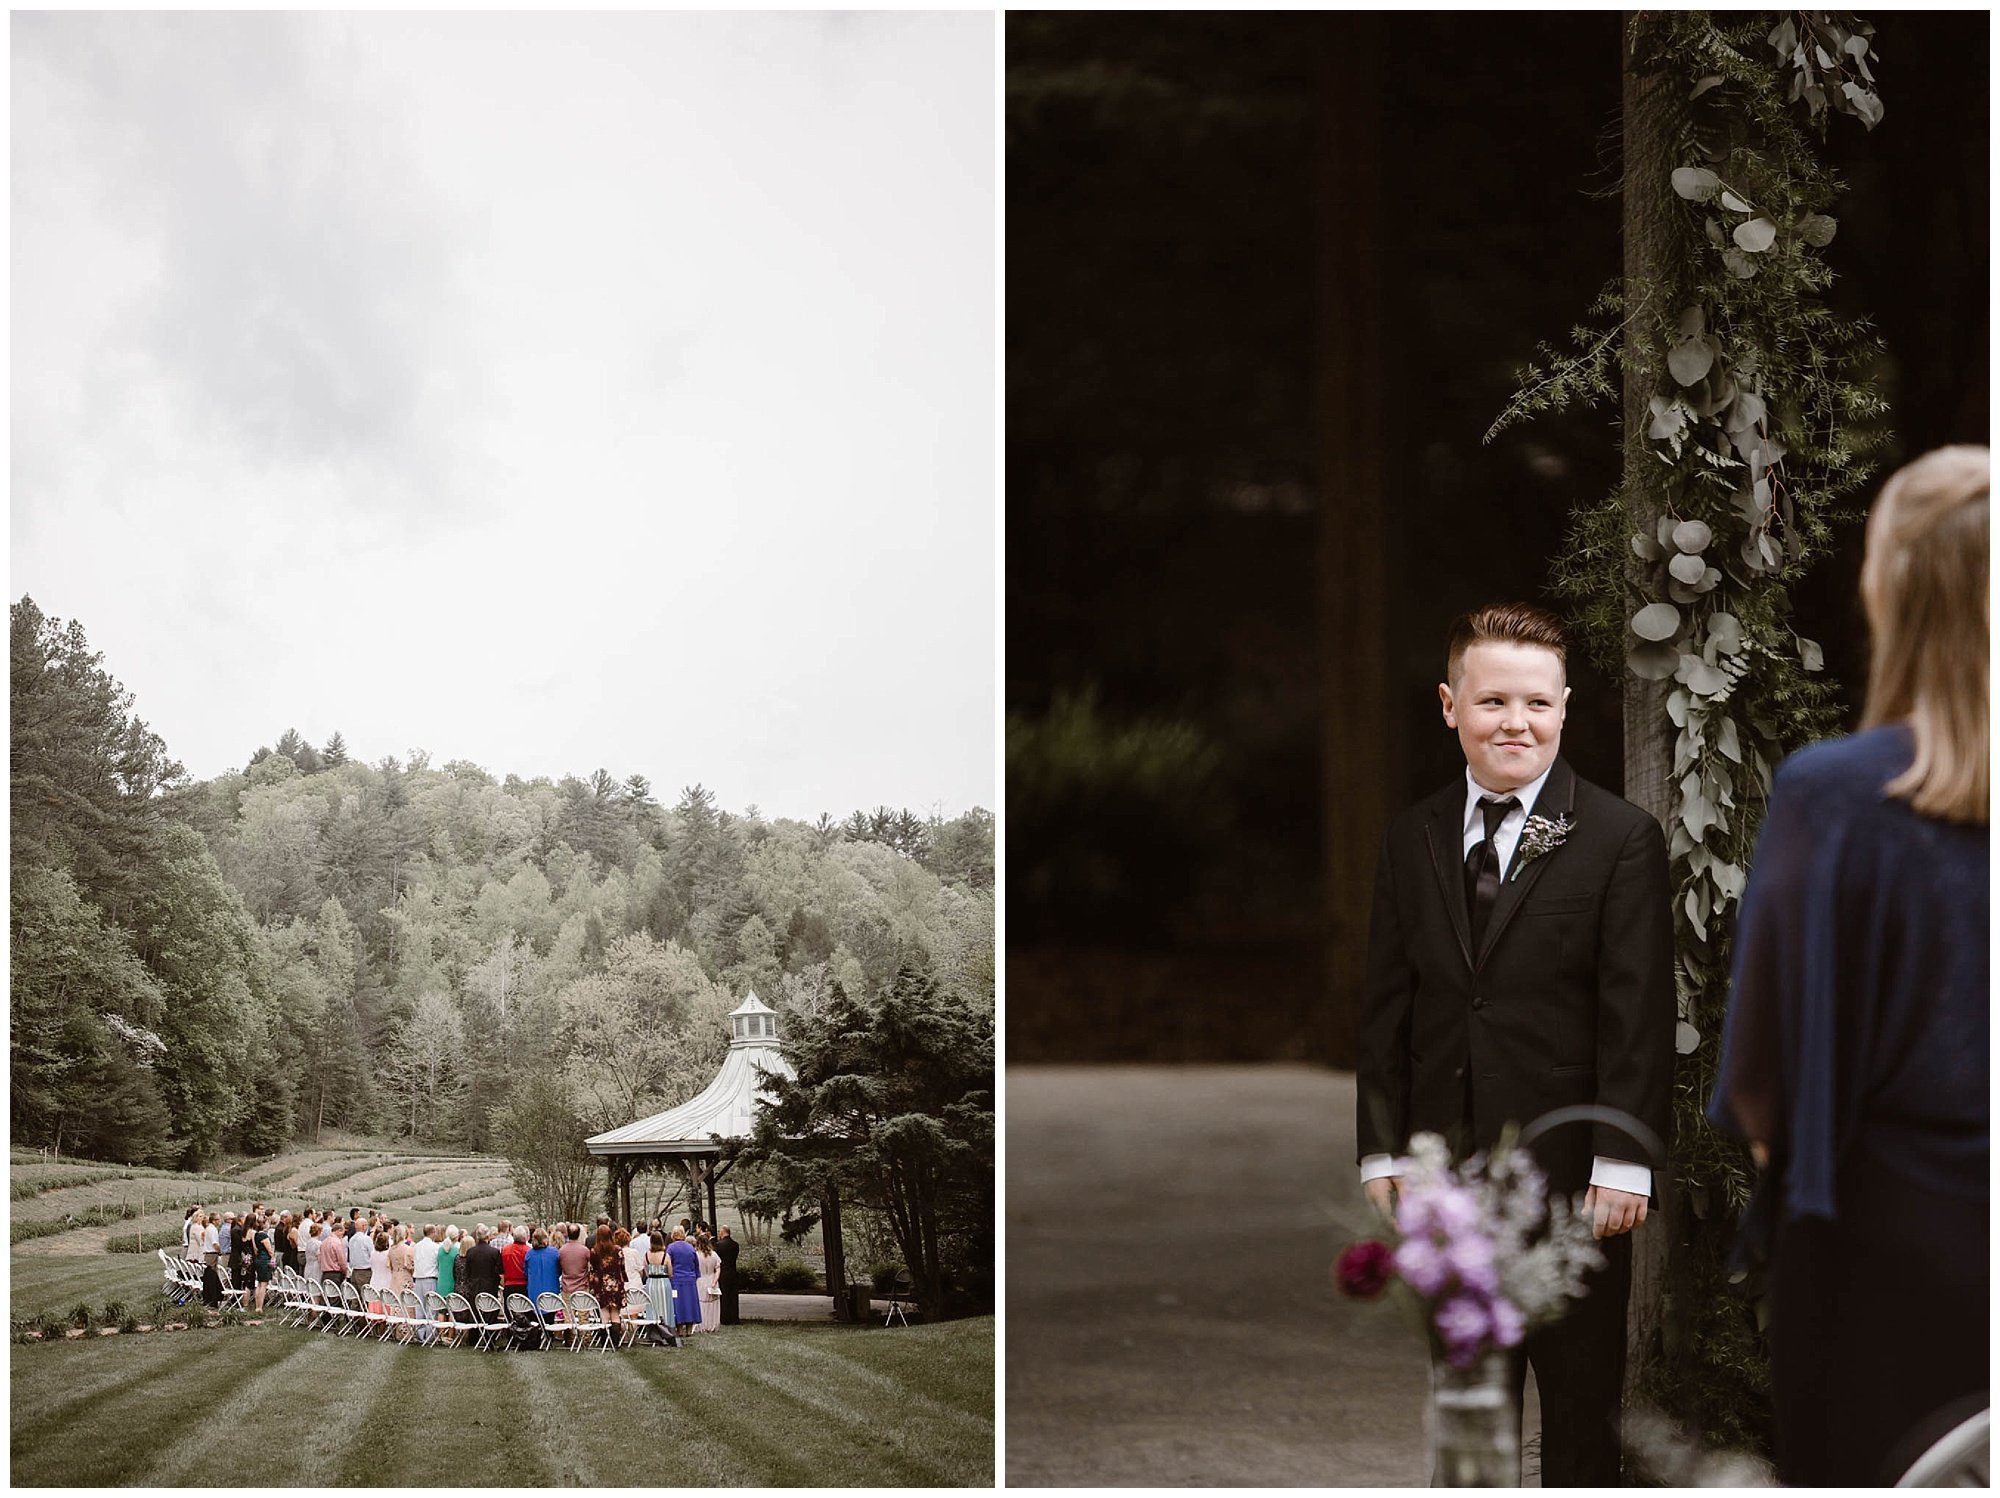 The Lily Barn Wedding in Townsend, TN